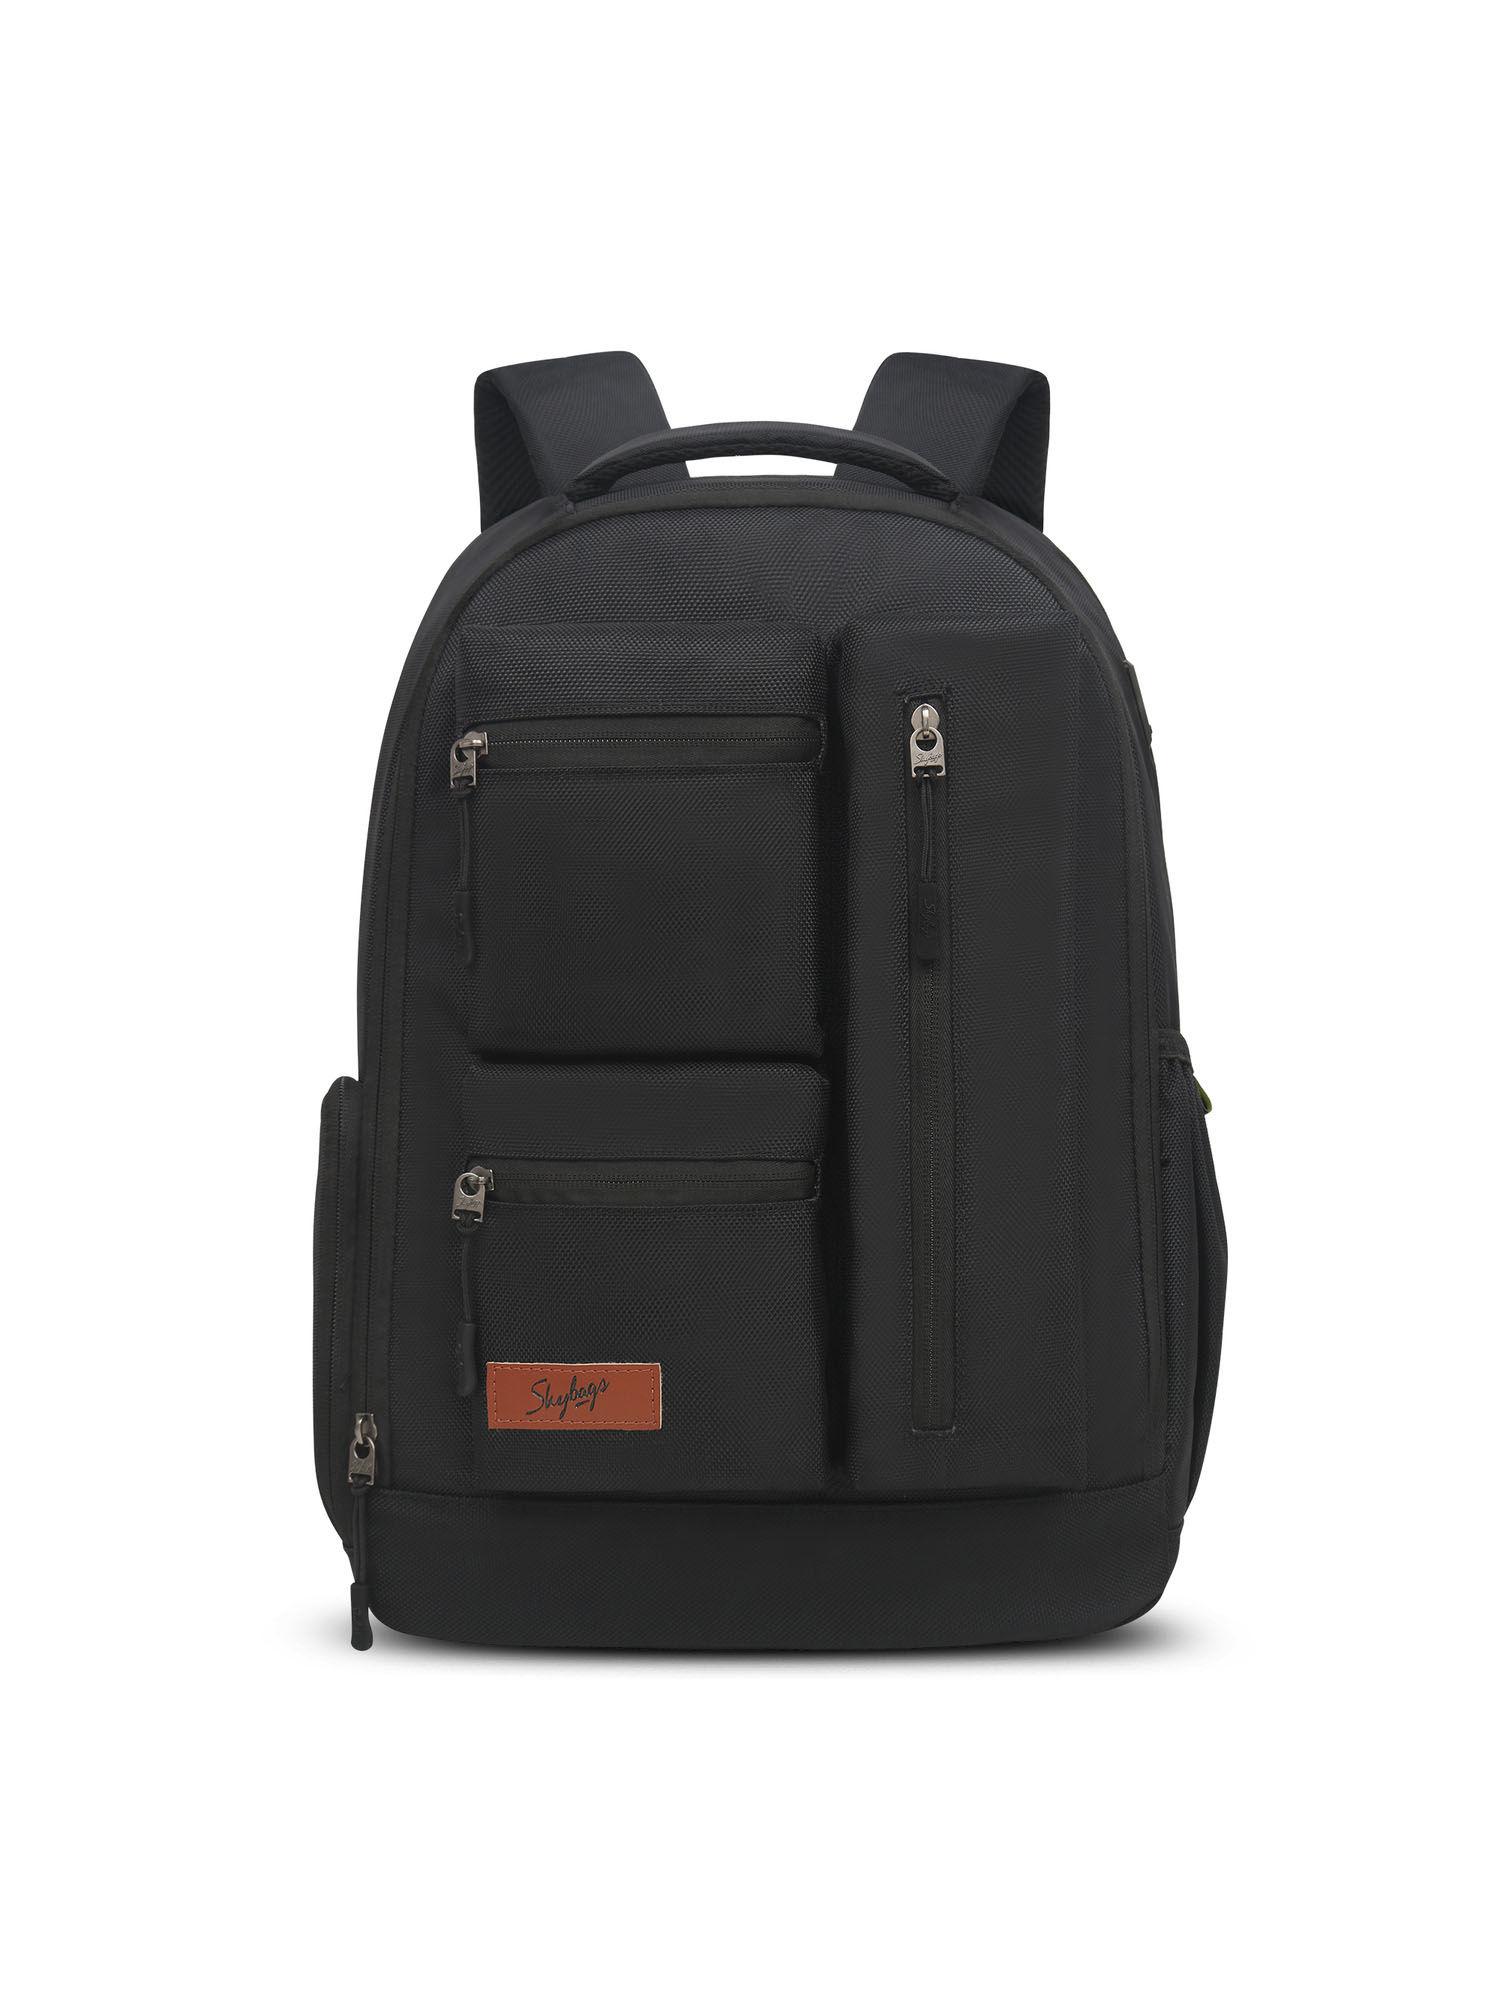 nexus laptop backpack (e) black